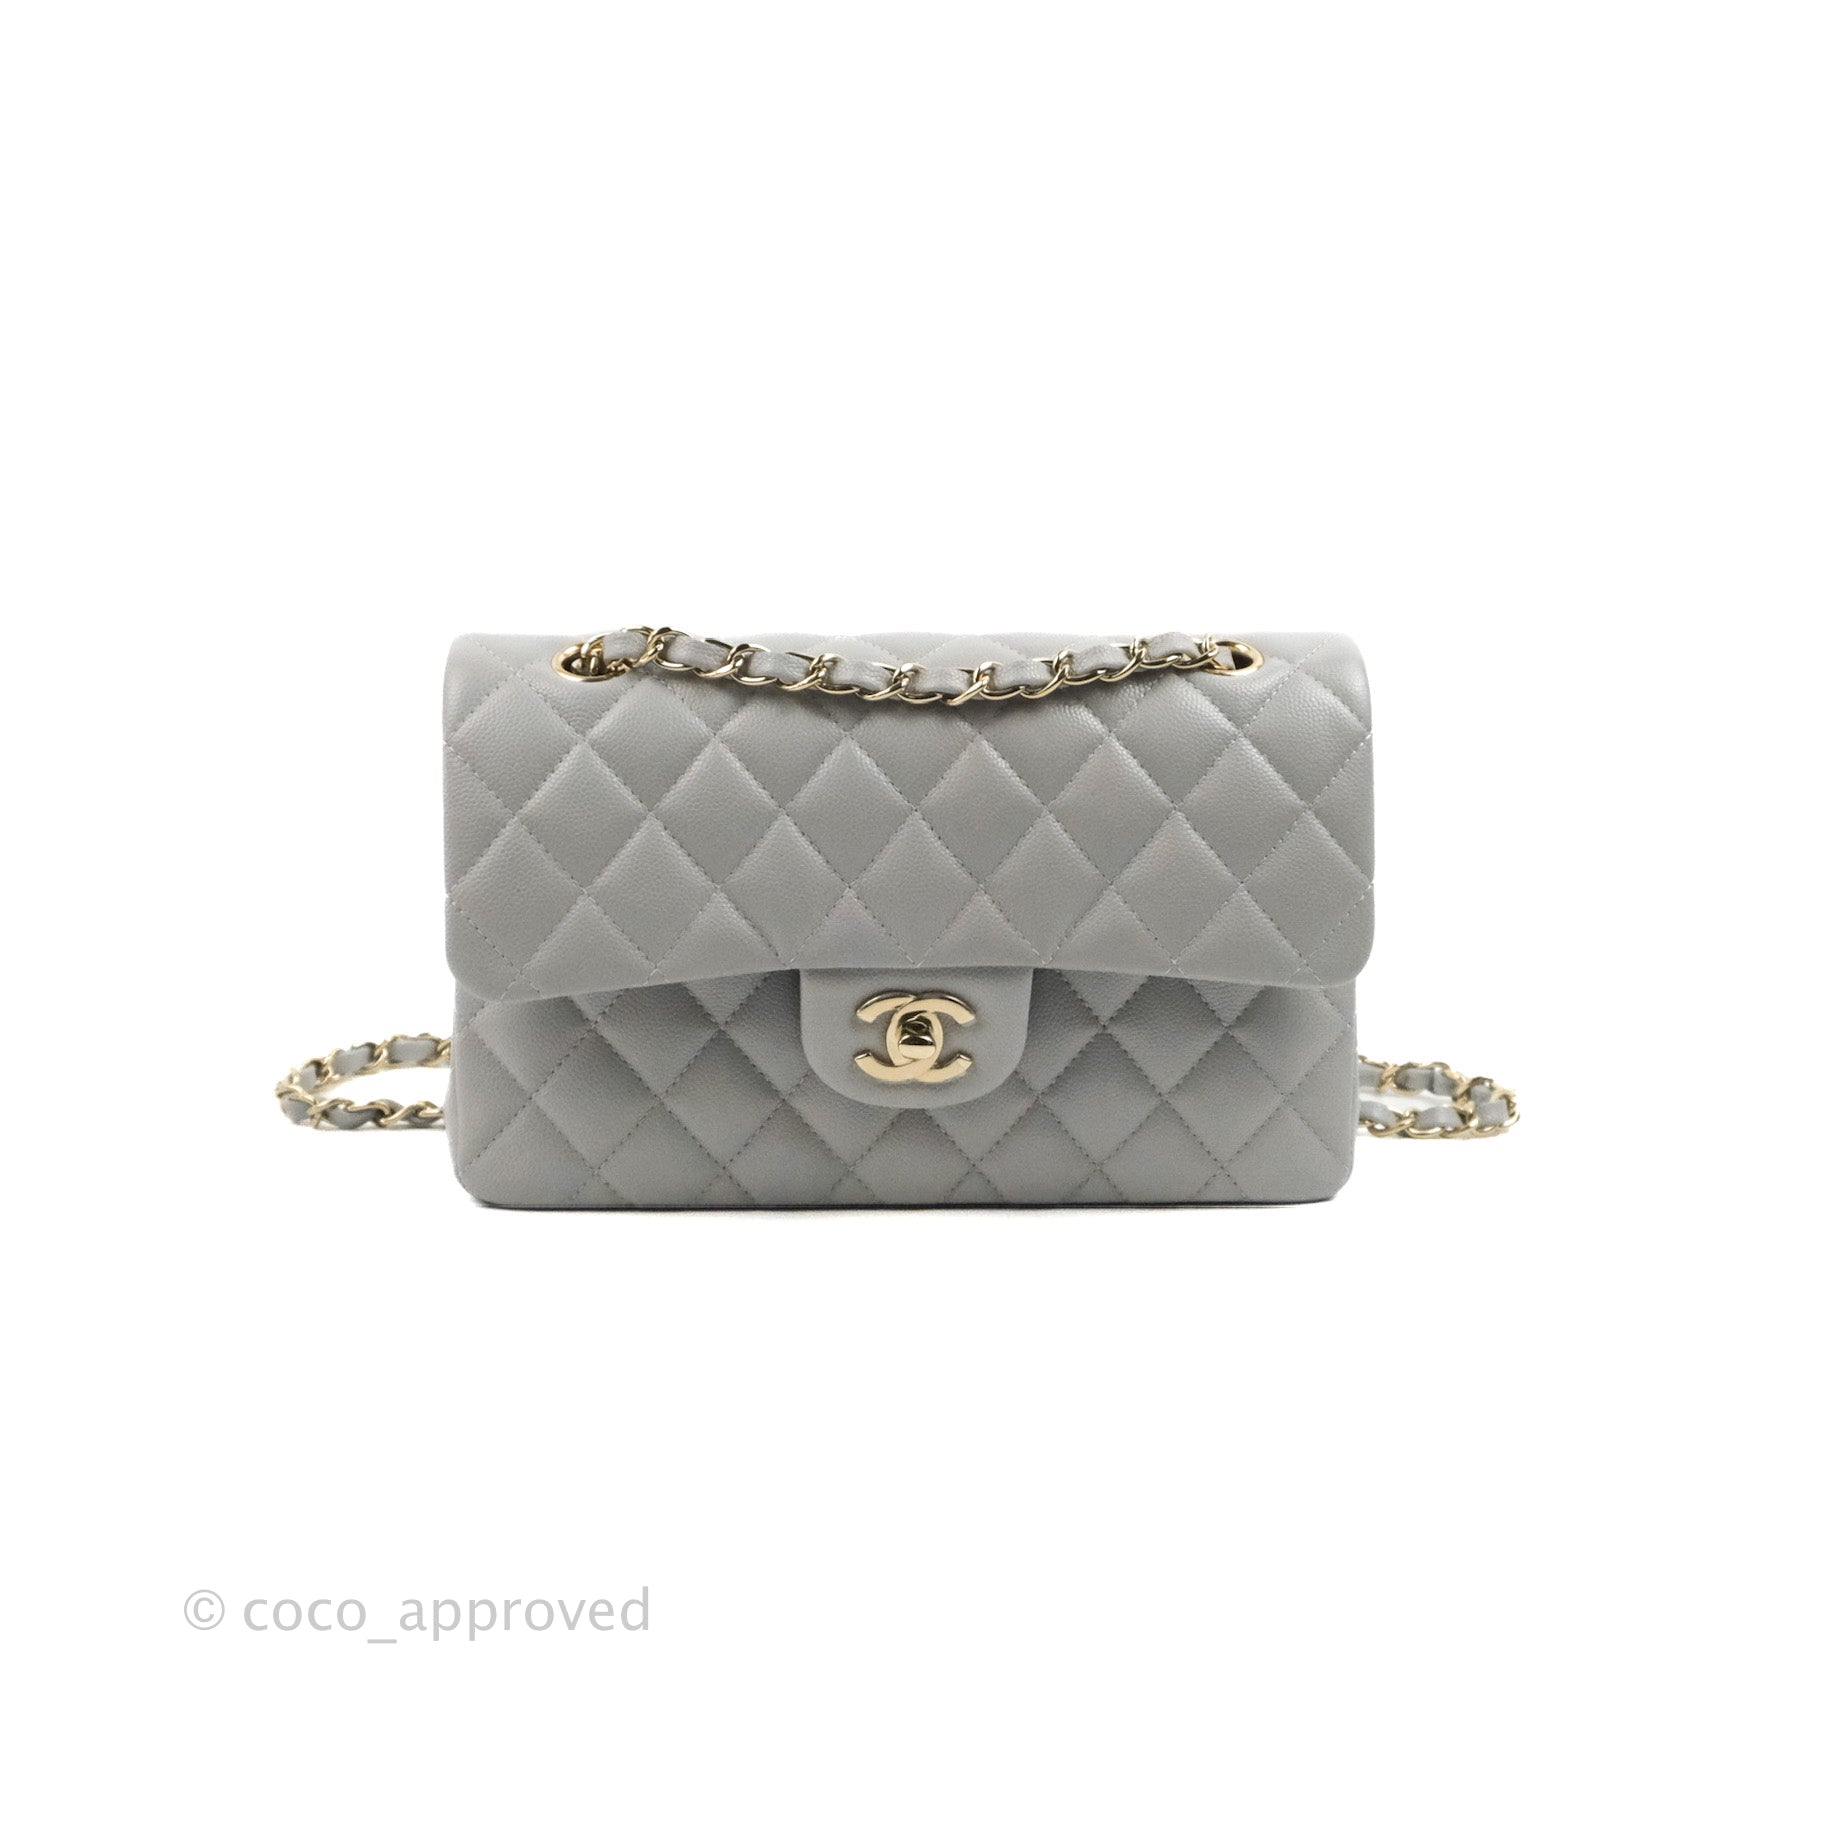 gray chanel purse